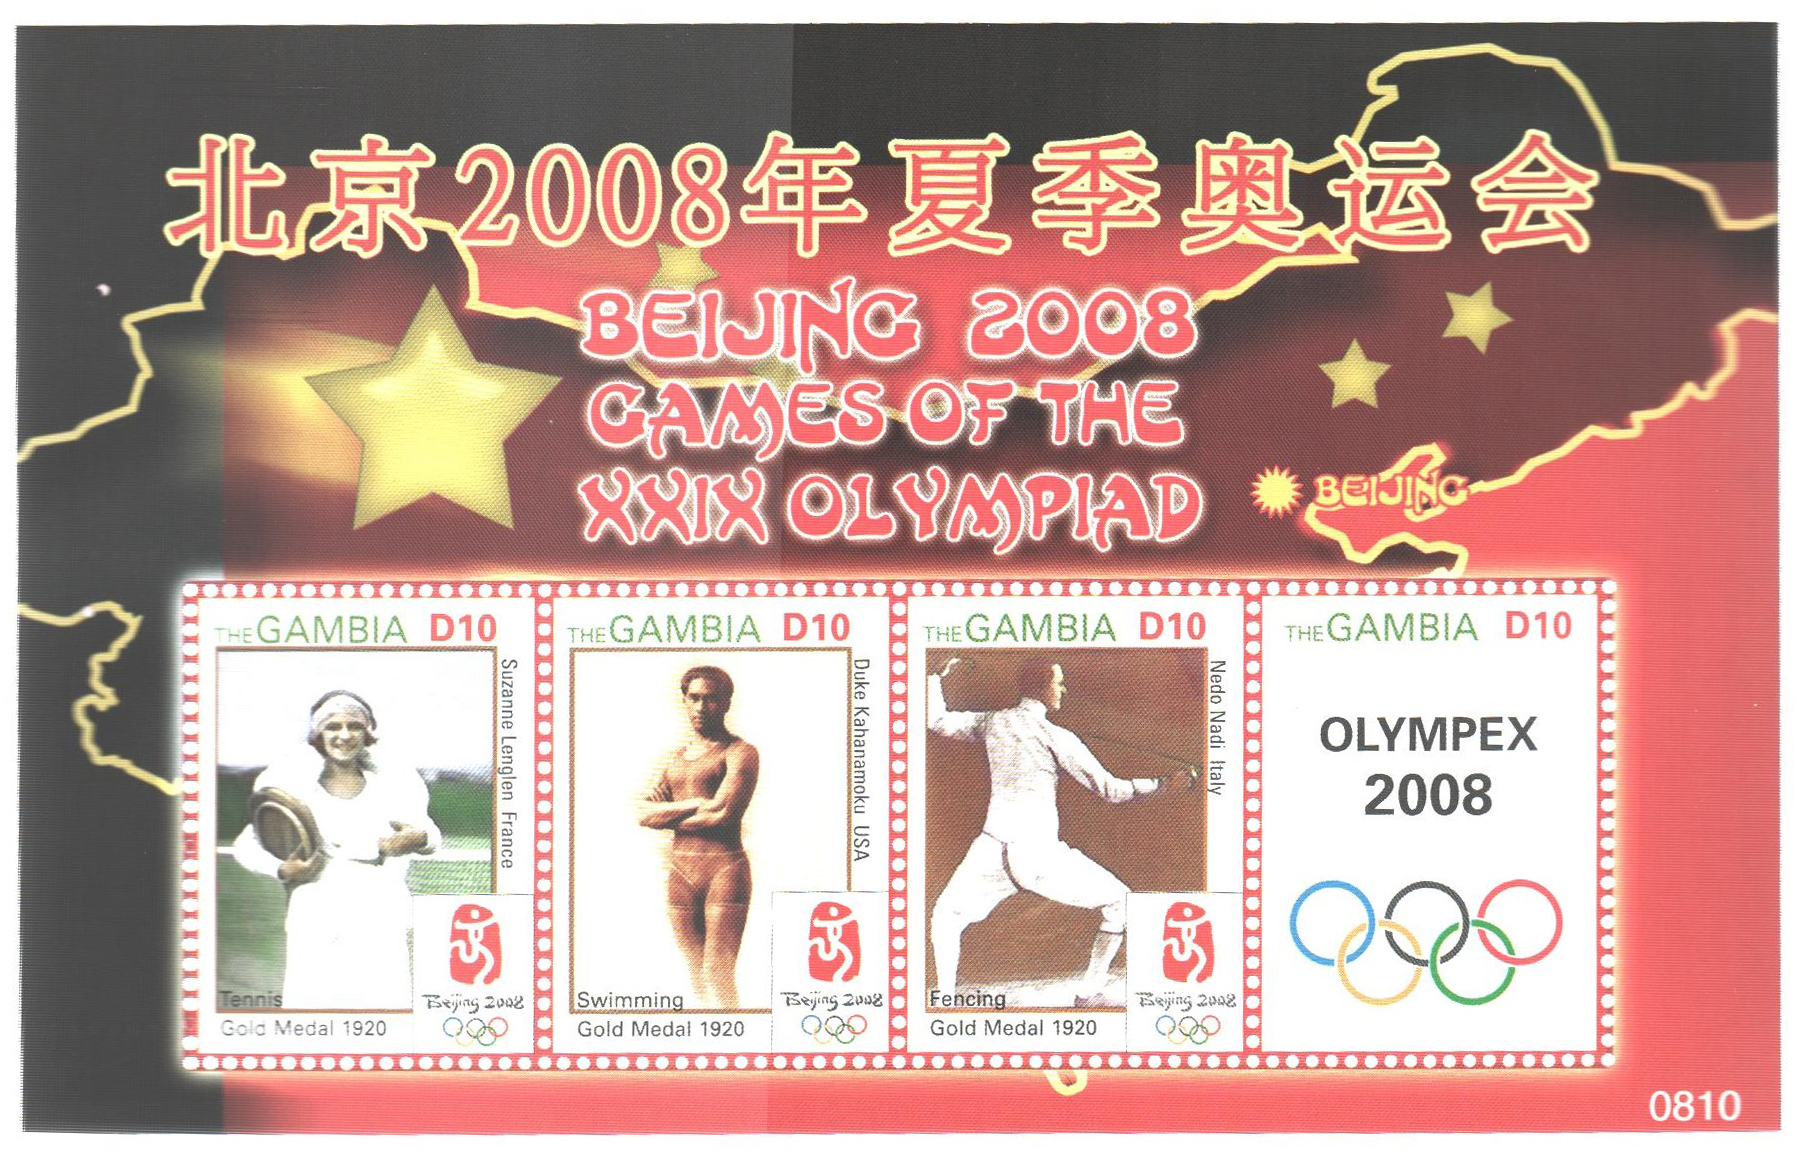 2008 Beijing Olympics Stamp Sheet